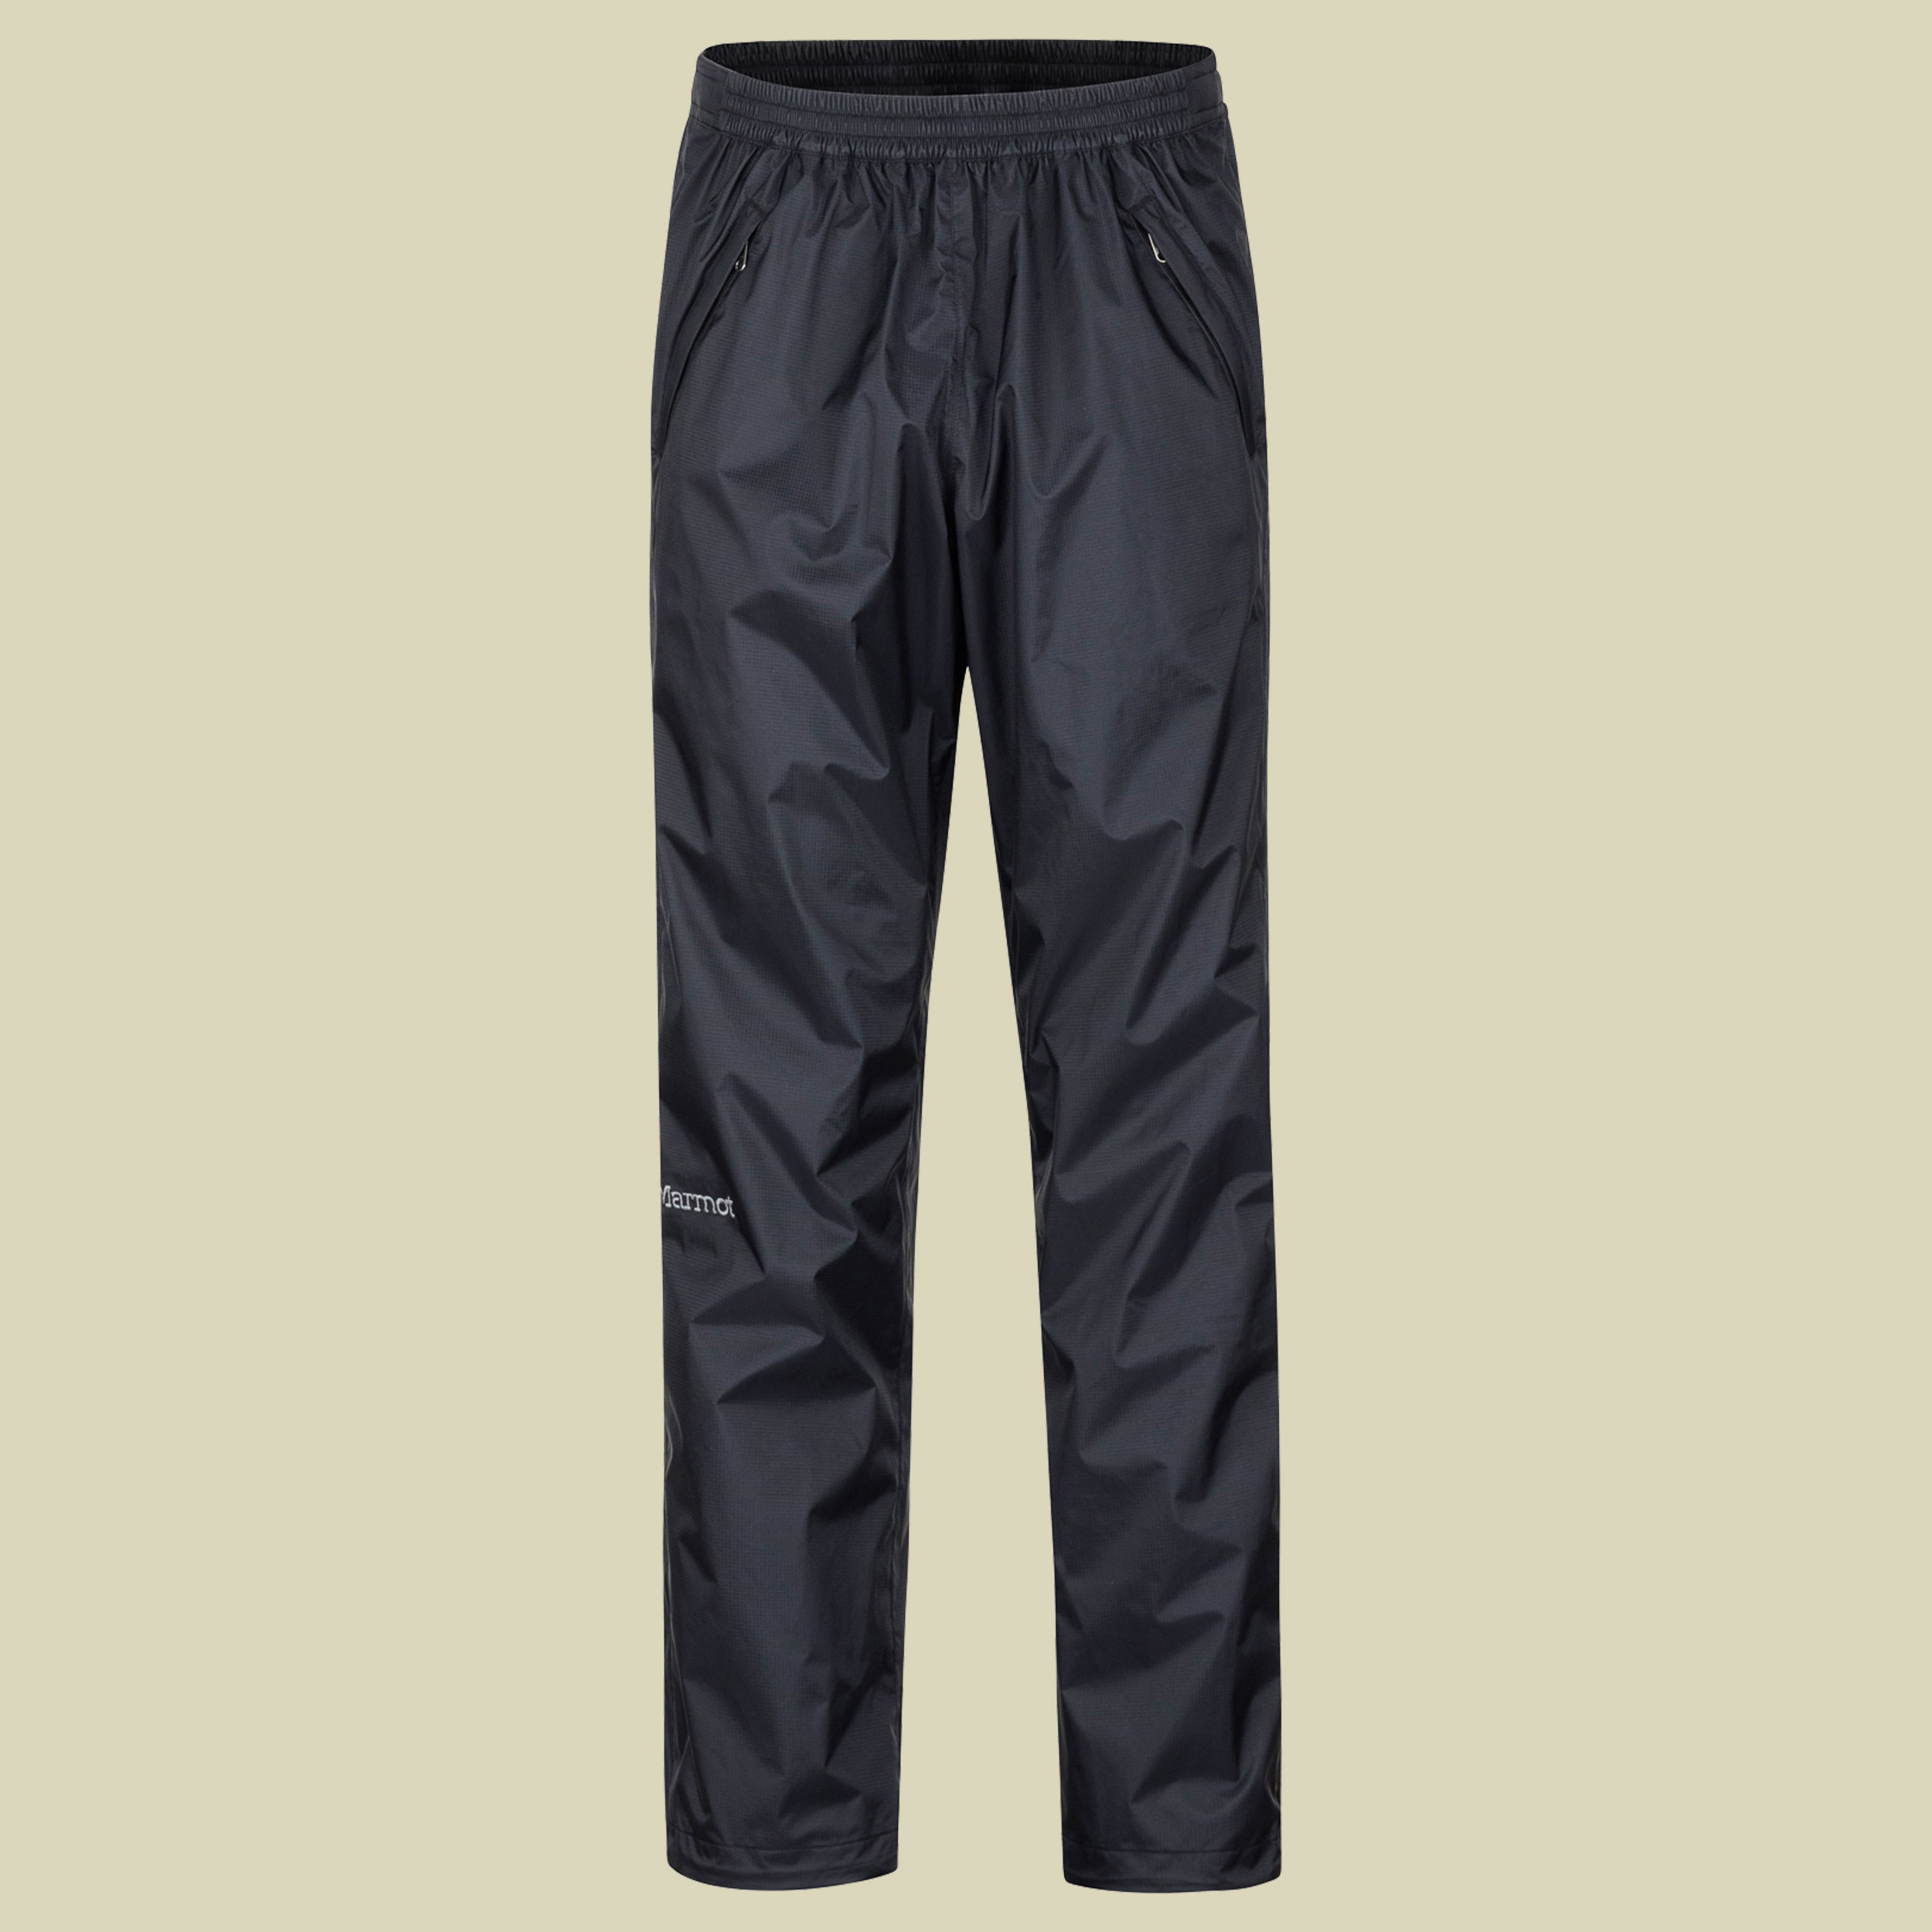 PreCip Eco Full Zip Pant long Men Größe S (long) Farbe black